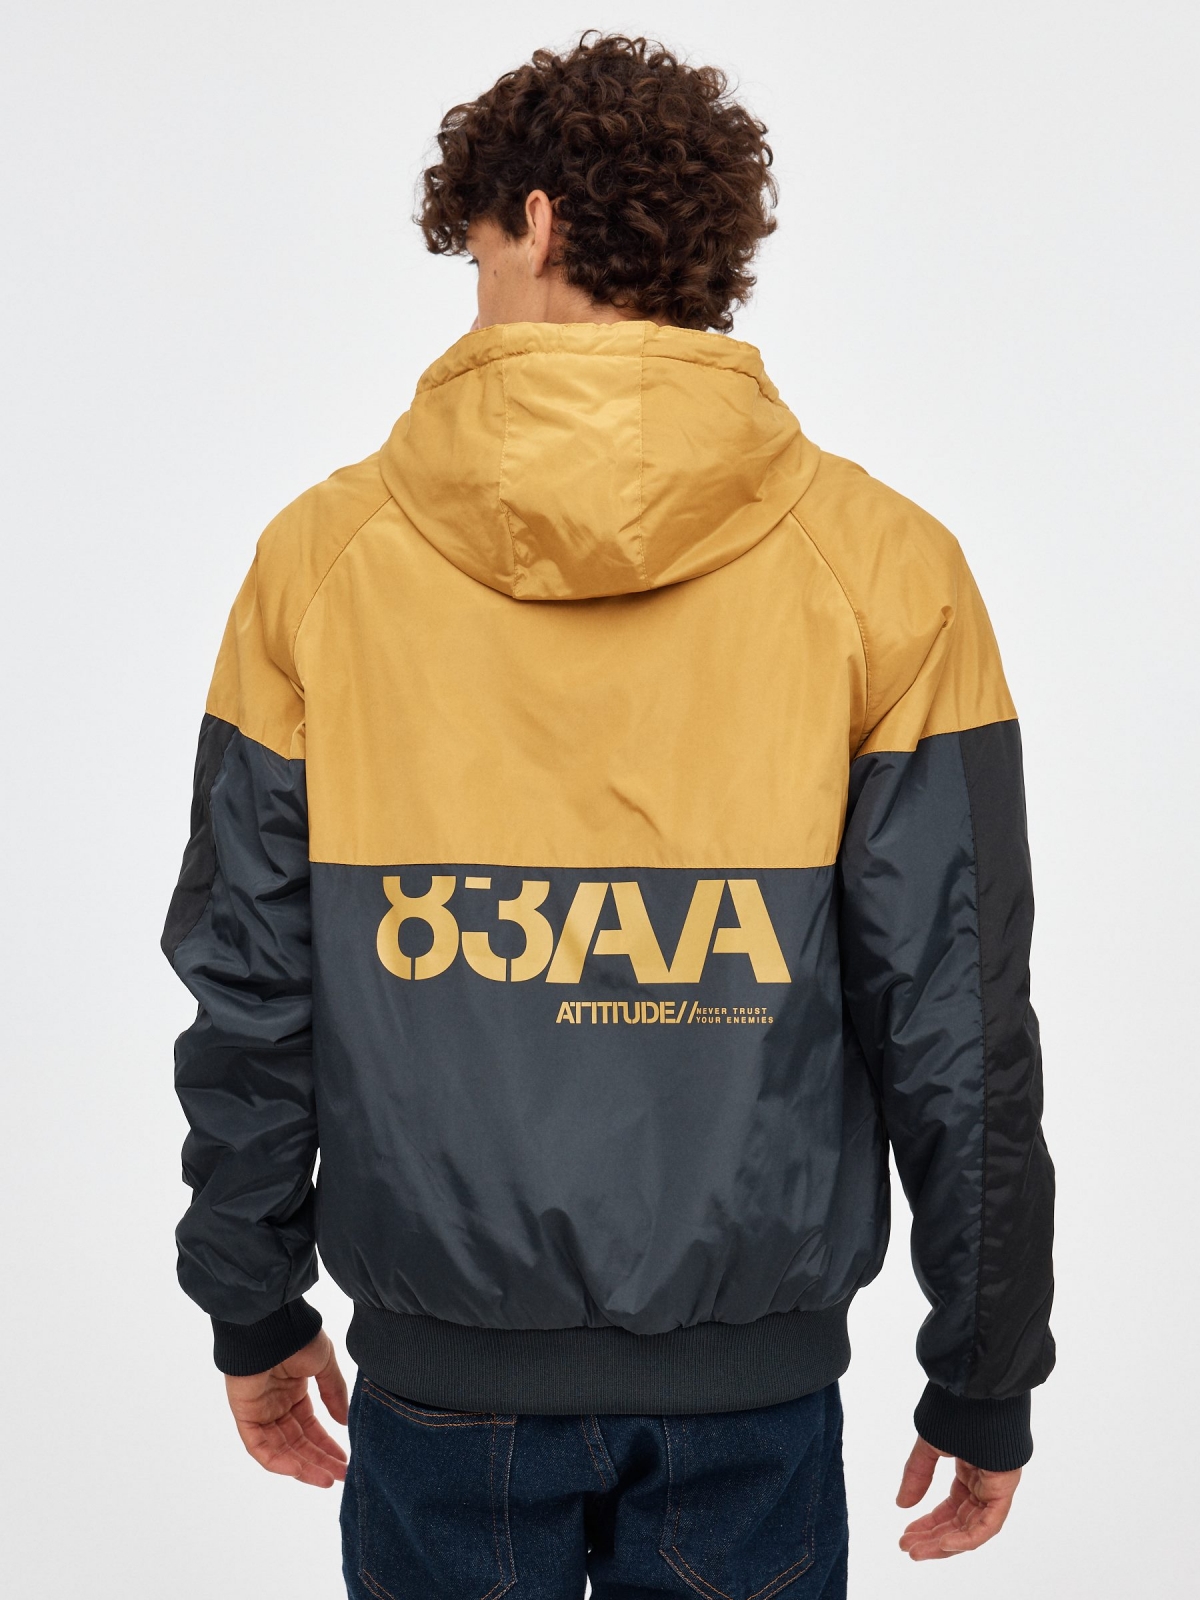 Nylon jacket coordinates ochre middle back view